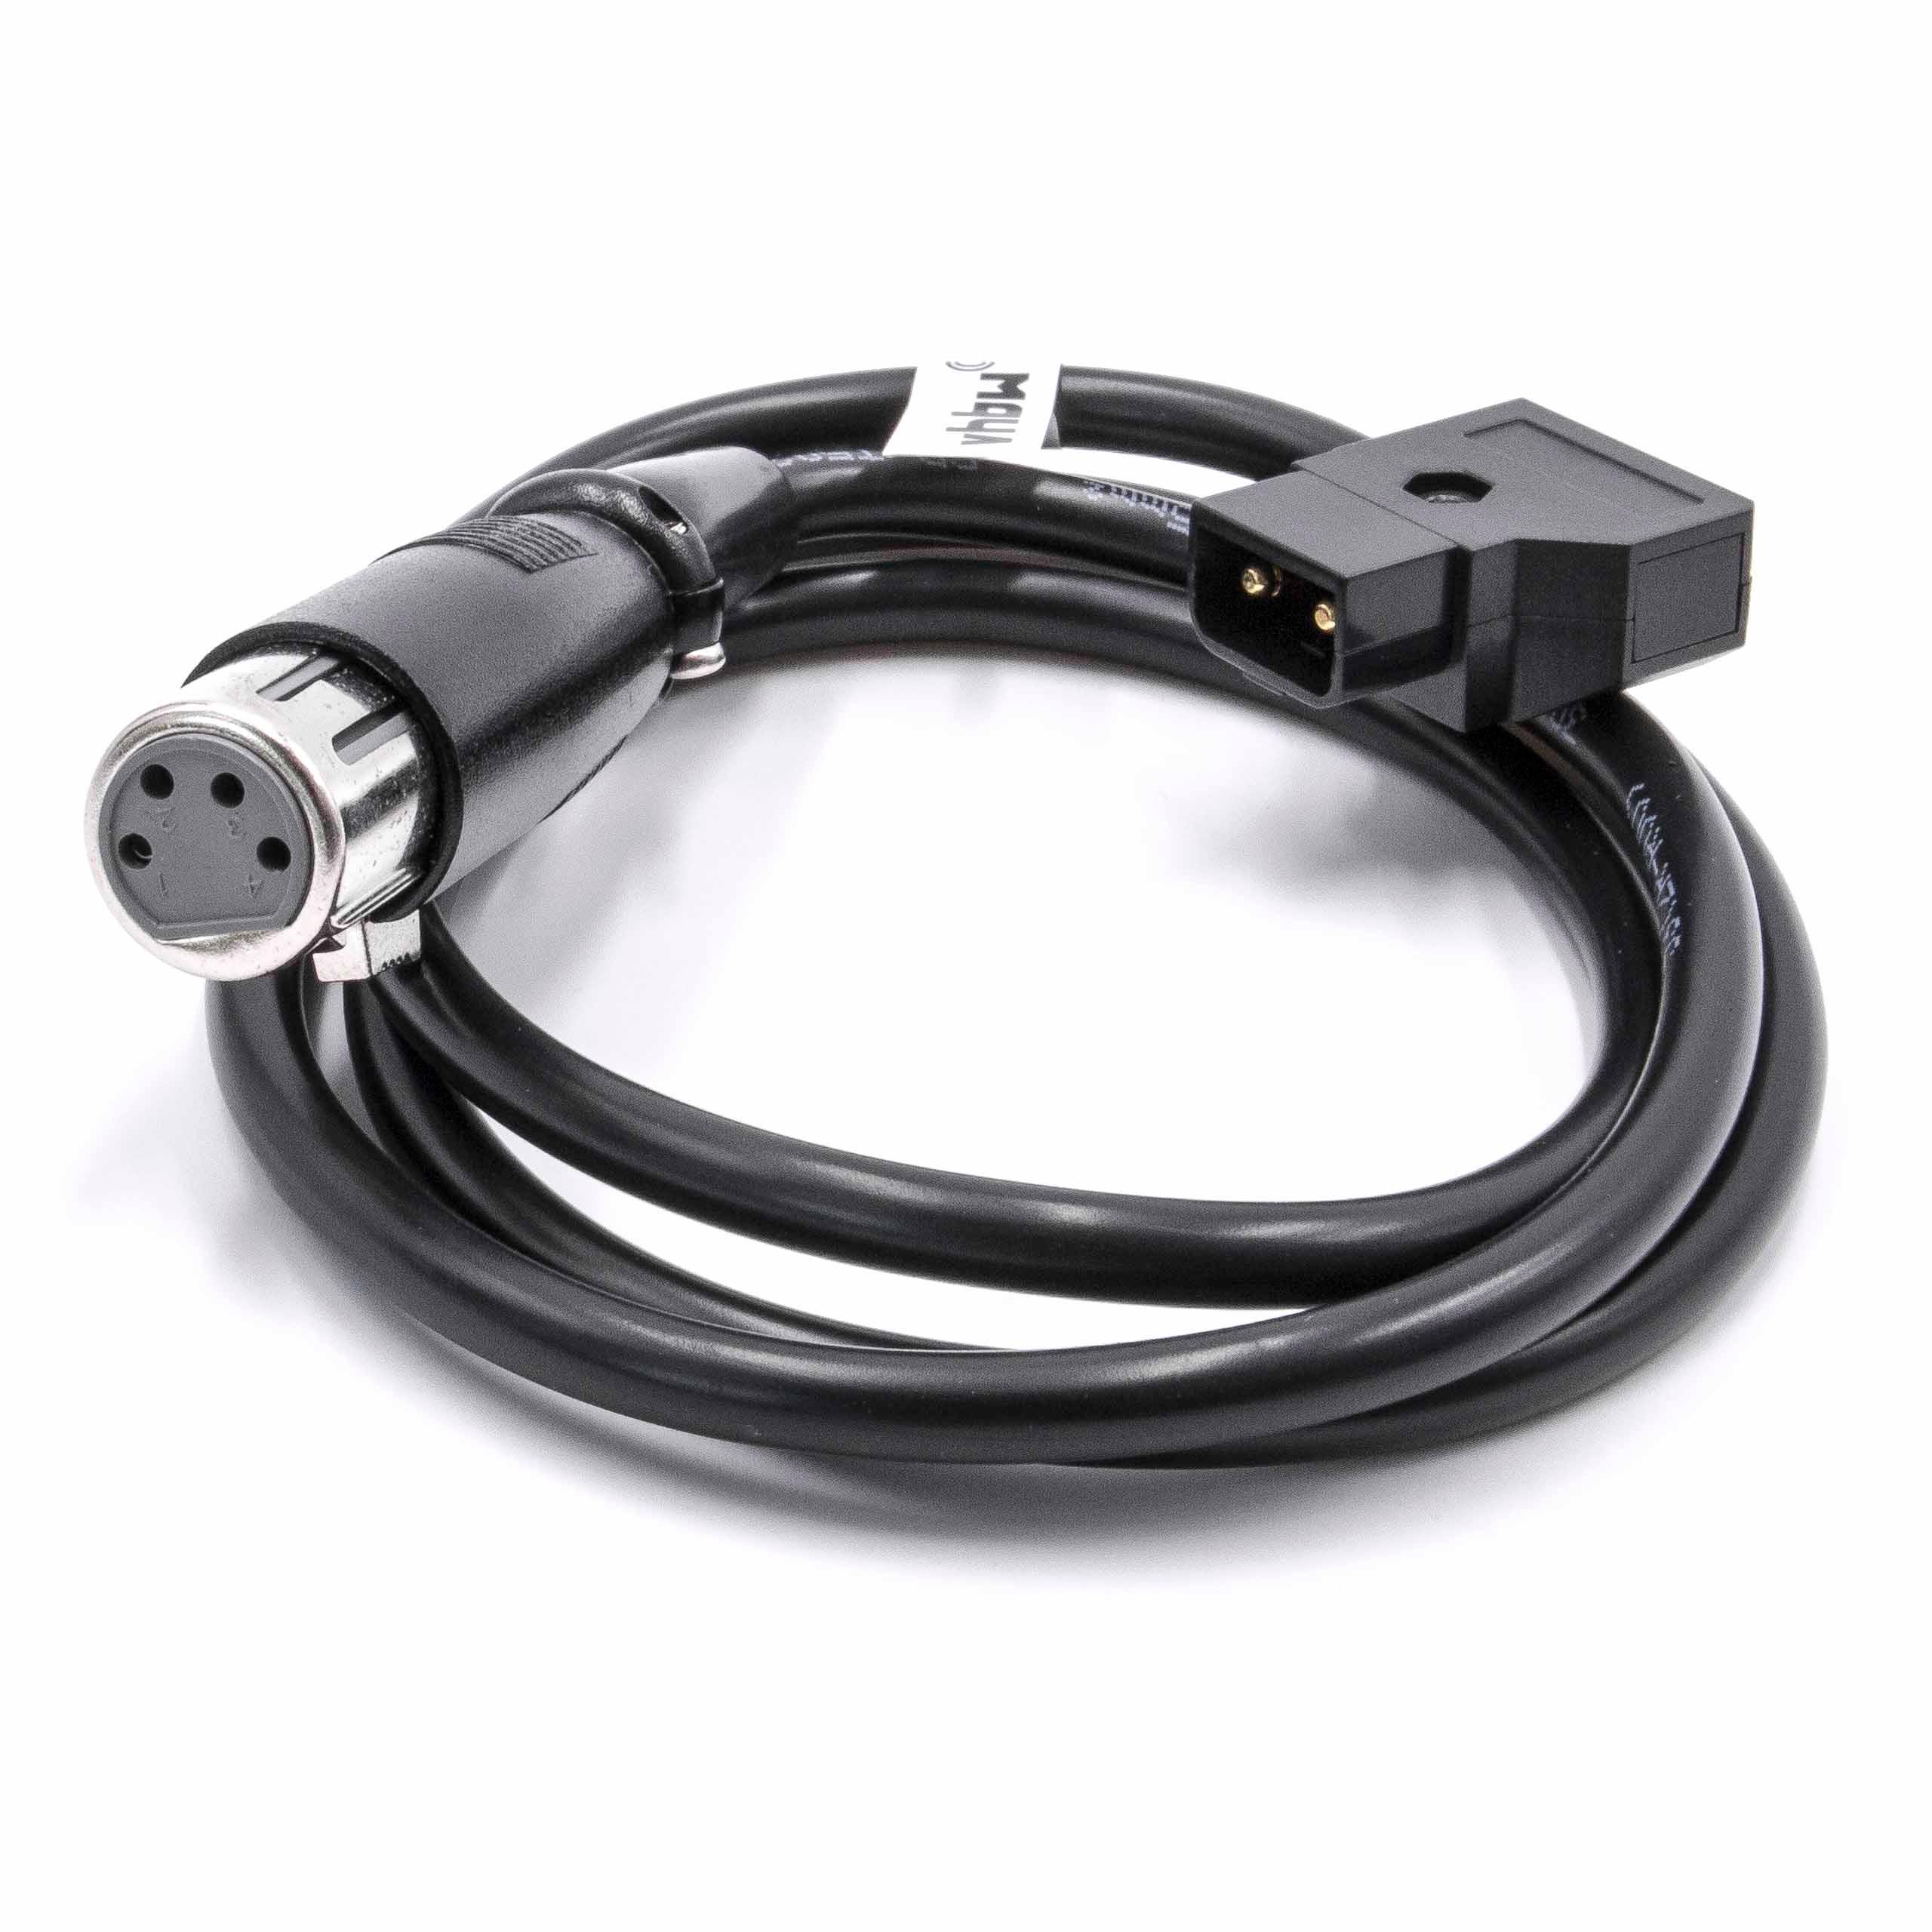 Cable adaptador D-Tap (m) a XLR a 4 pin para cámara Anton Bauer D-Tap, Dionic - 1 m negro